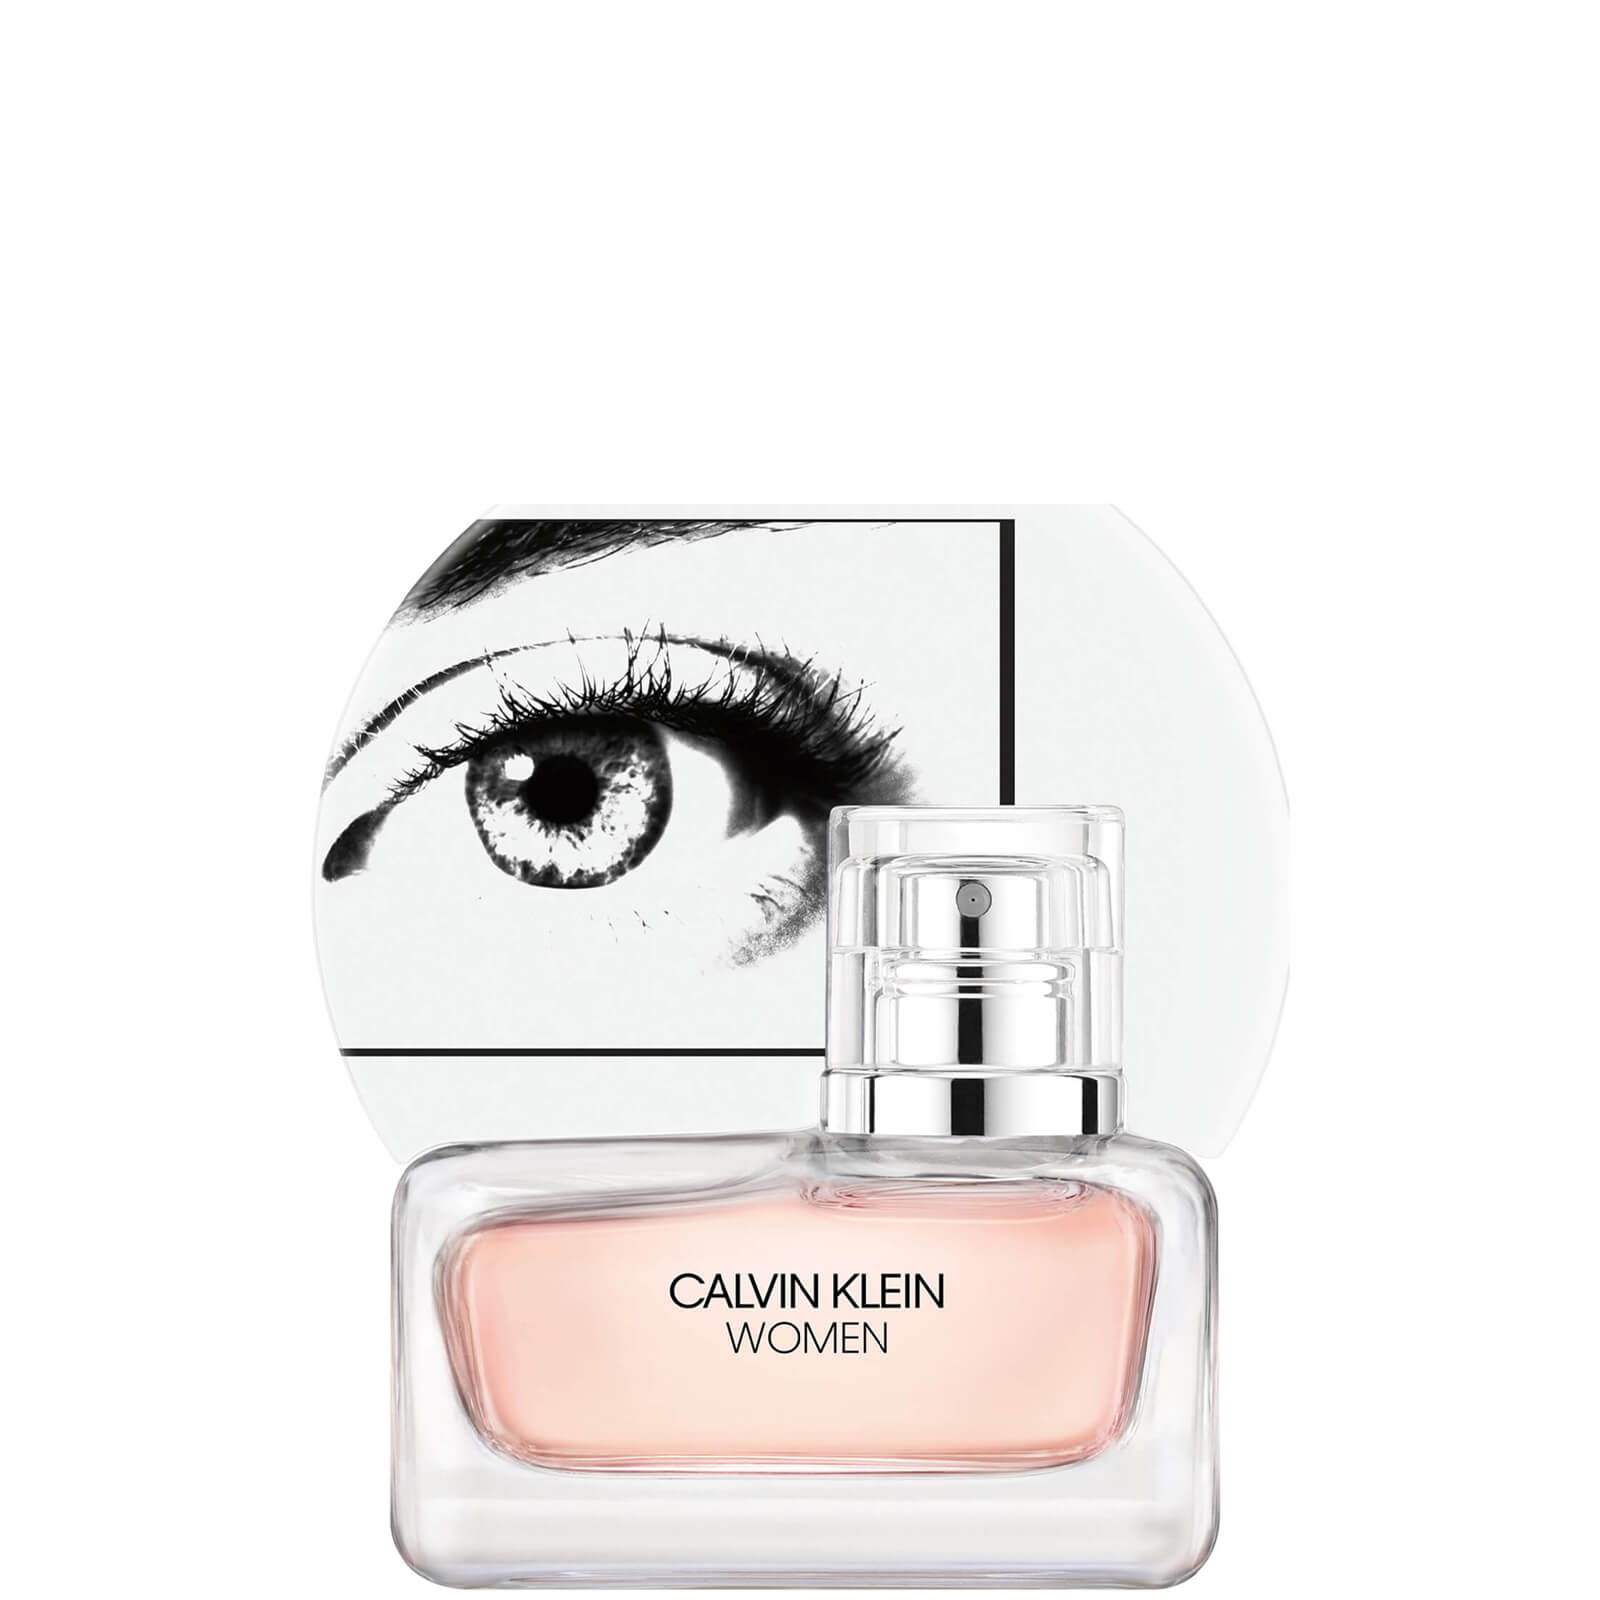 Photos - Women's Fragrance Calvin Klein Women Eau de Parfum 30ml 65100002000 